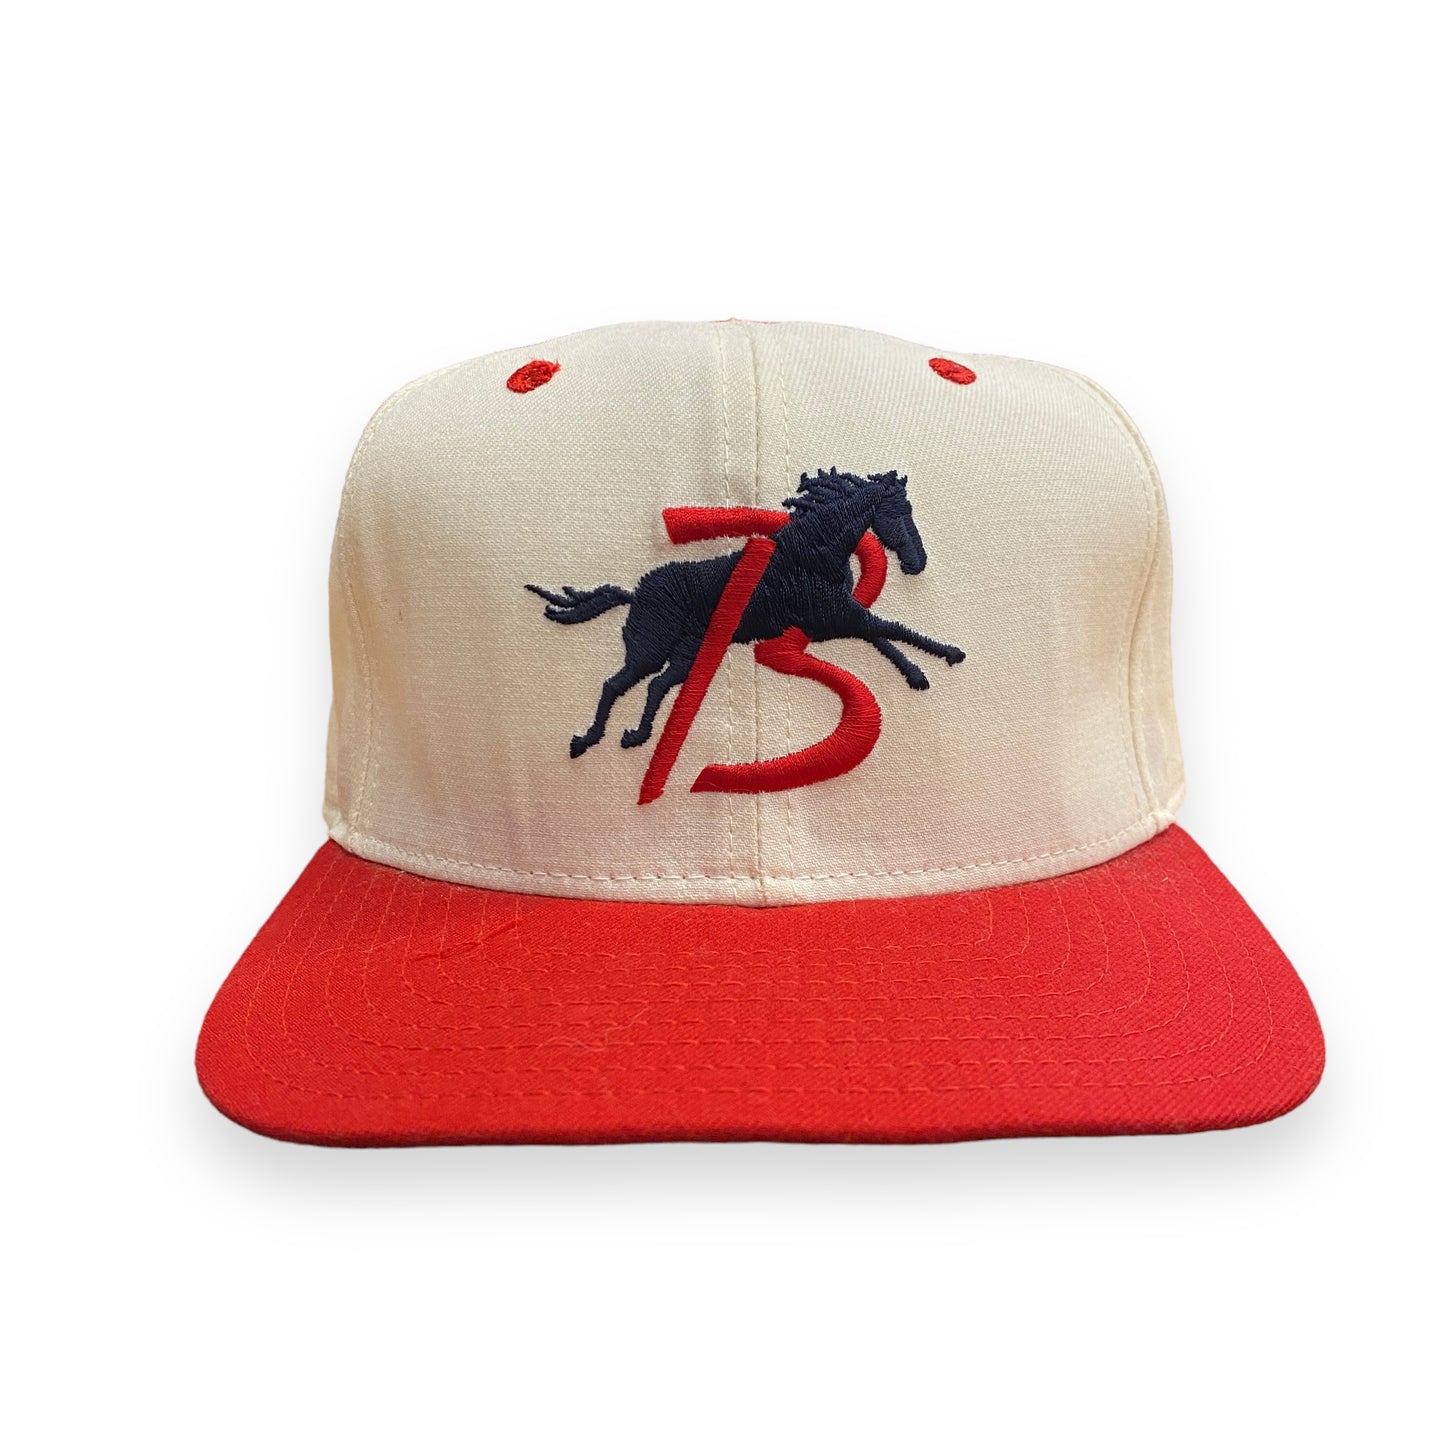 Vintage New Era Billings Mustangs Minor League Baseball Snapback Hat